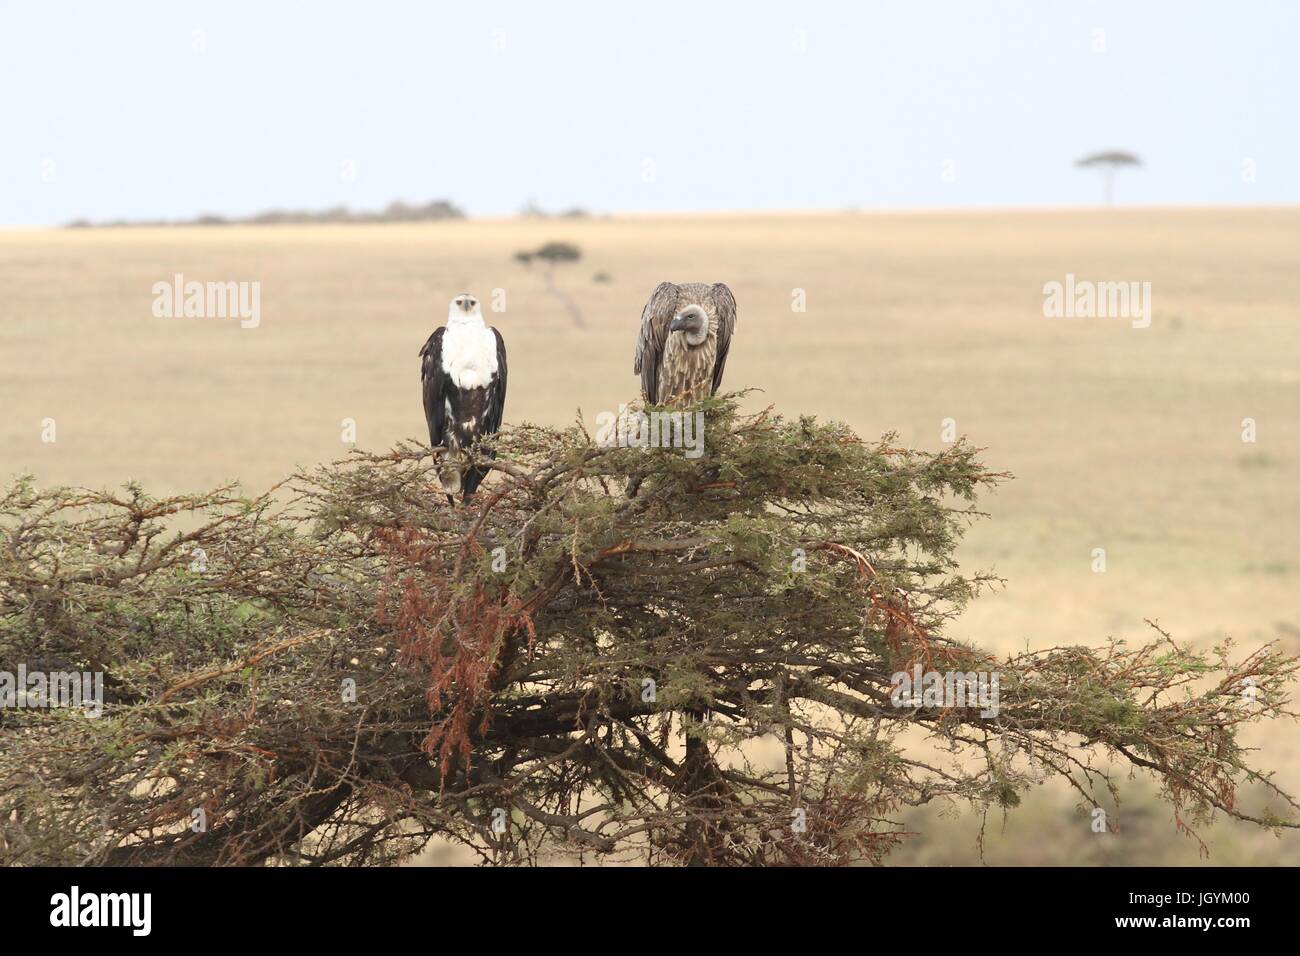 Eagle and vulture share a tree Stock Photo